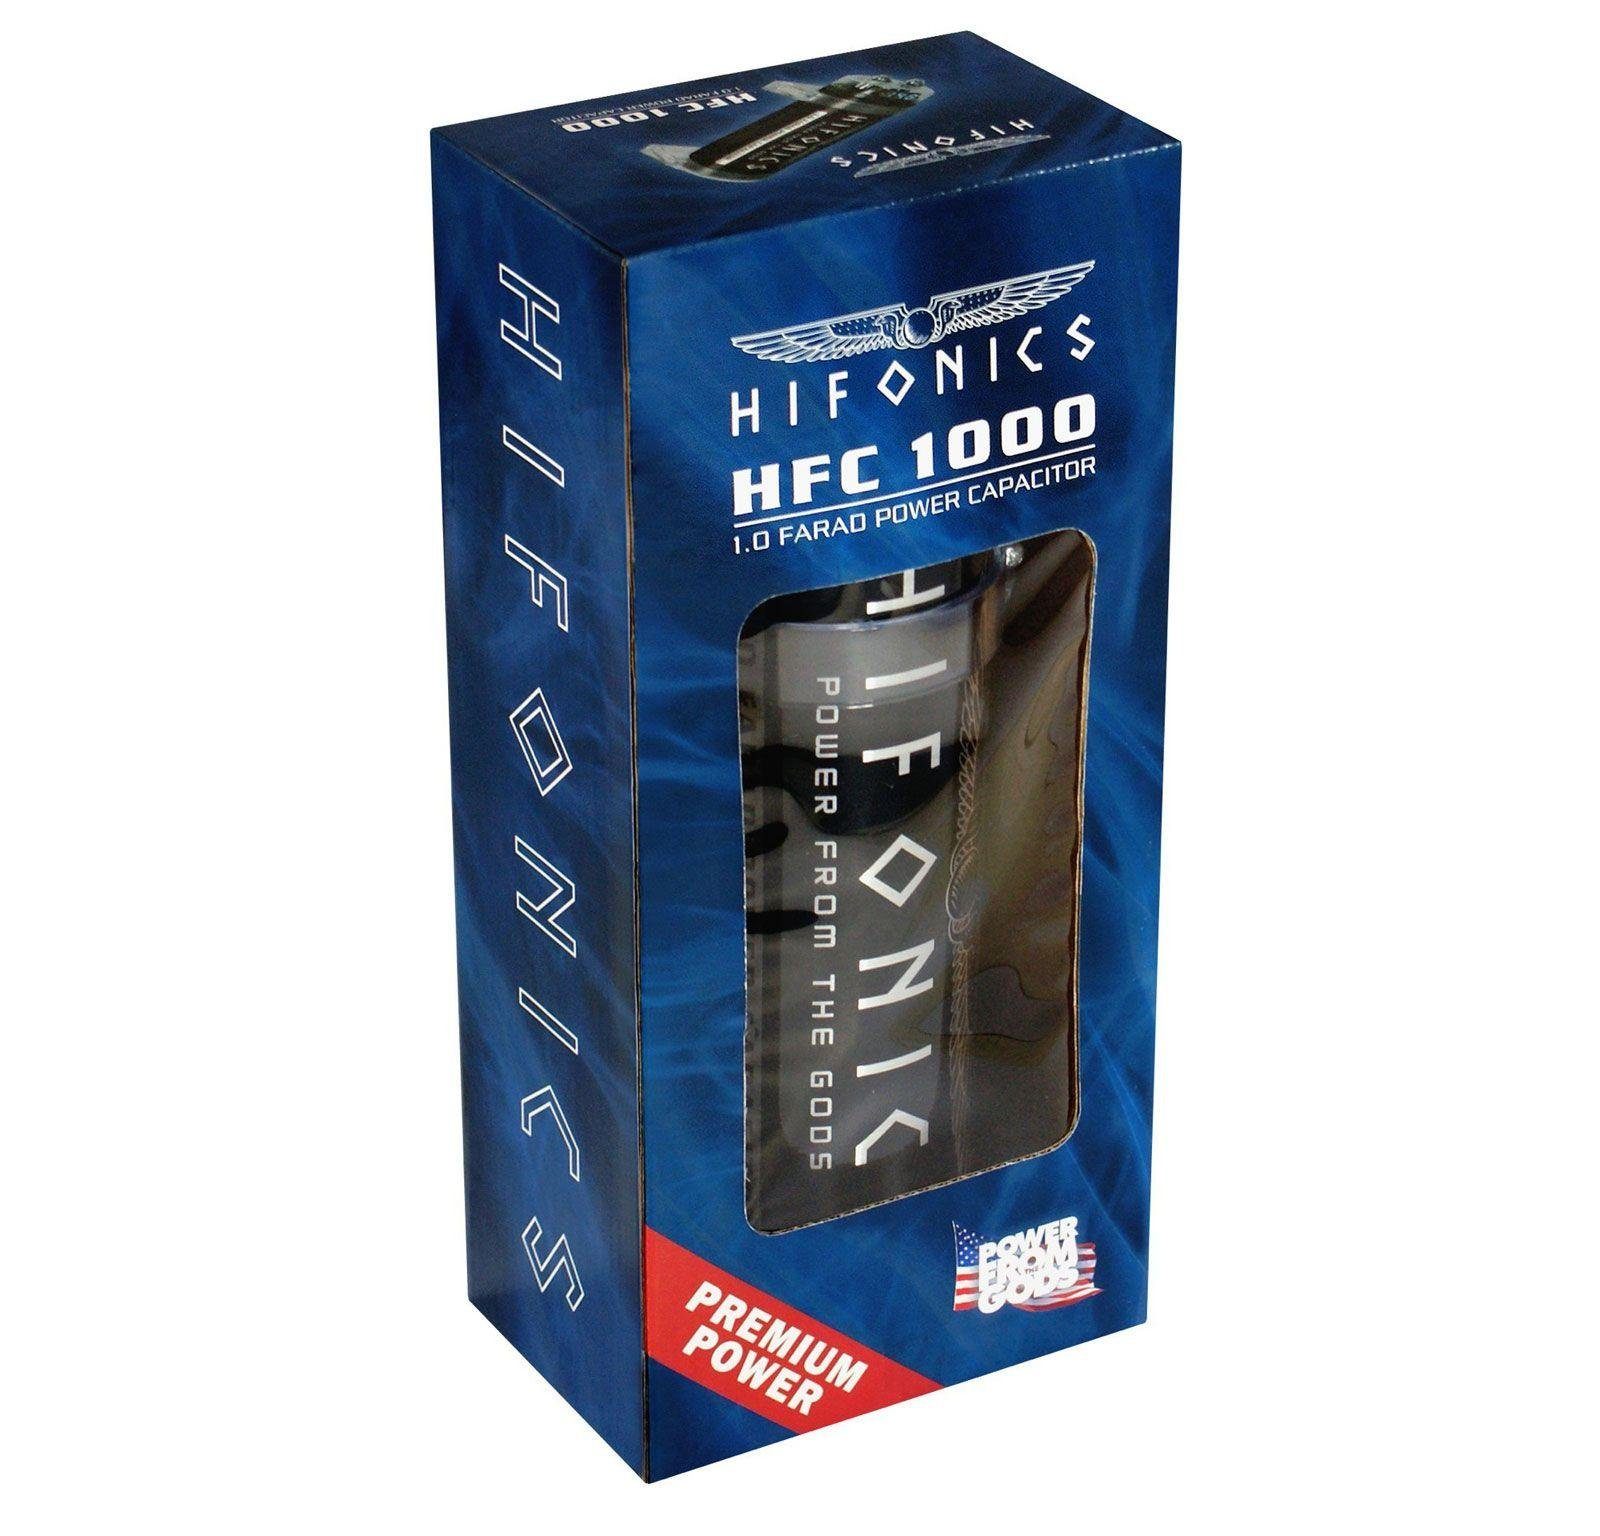 Auto-Subwoofer Farad-Pufferelko Hifonics Cap für 1 1.0 HFC1000 Farad